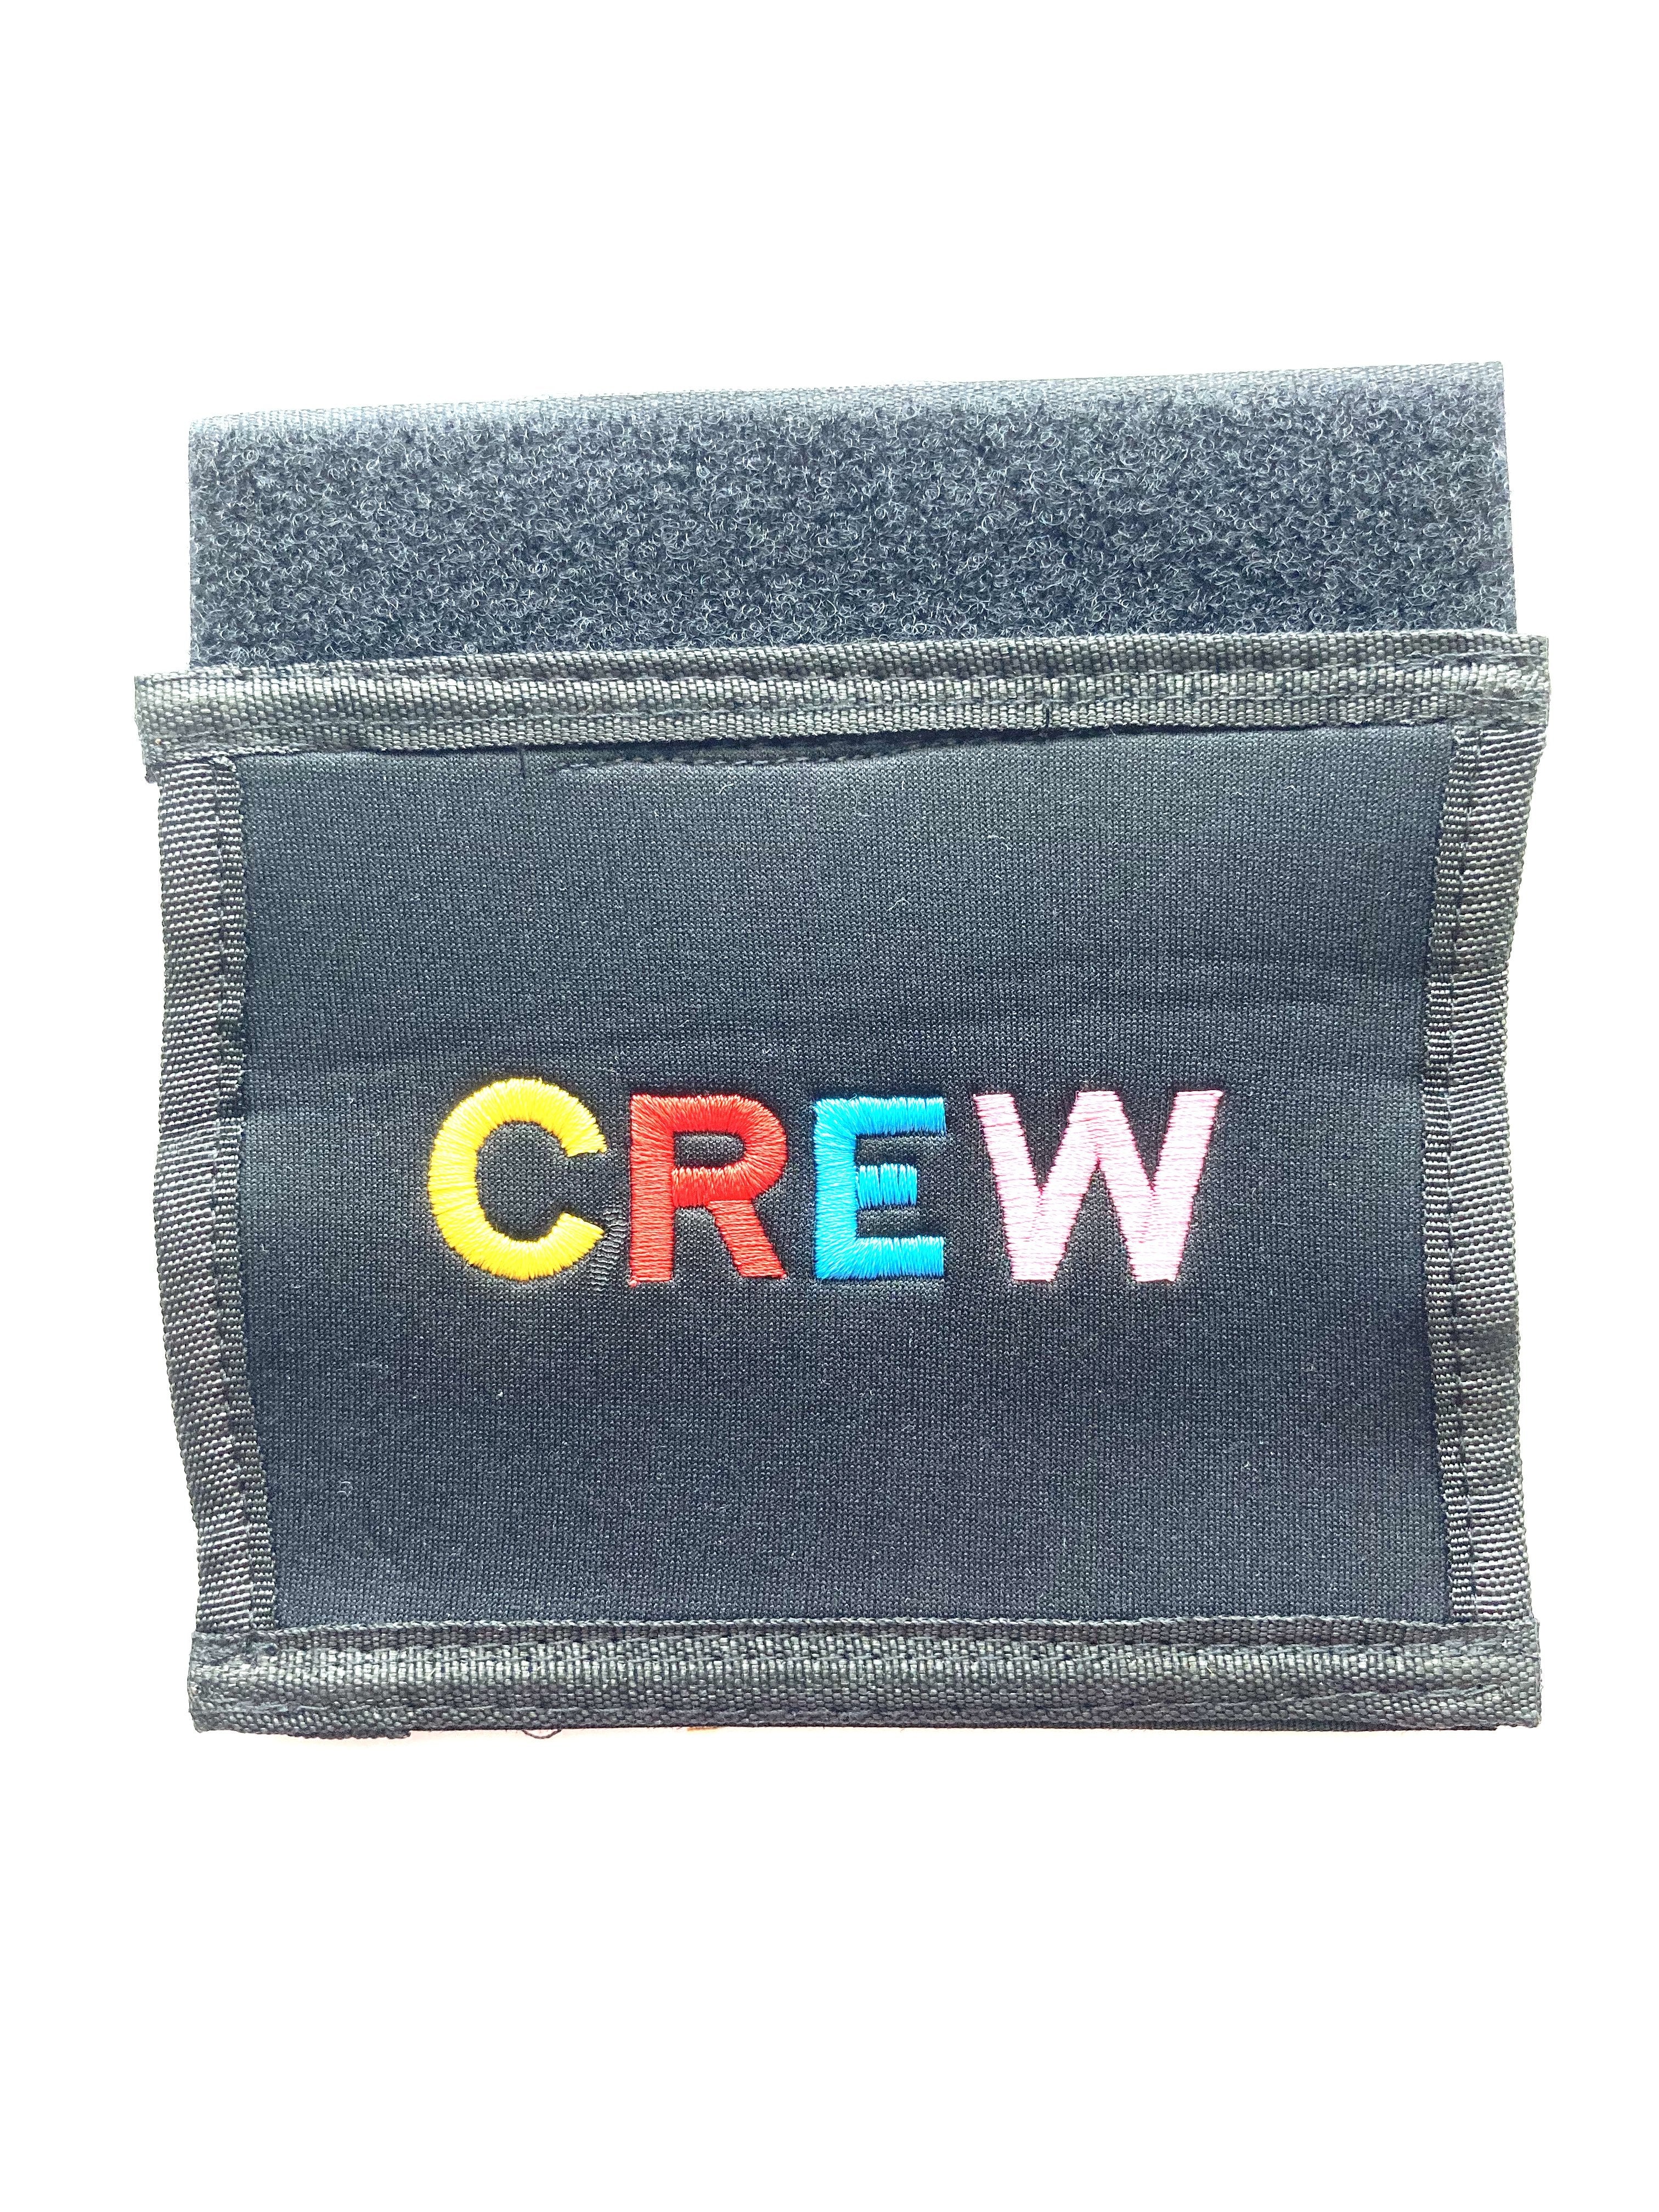 Crew Luggage Handle Cover (Rainbow)